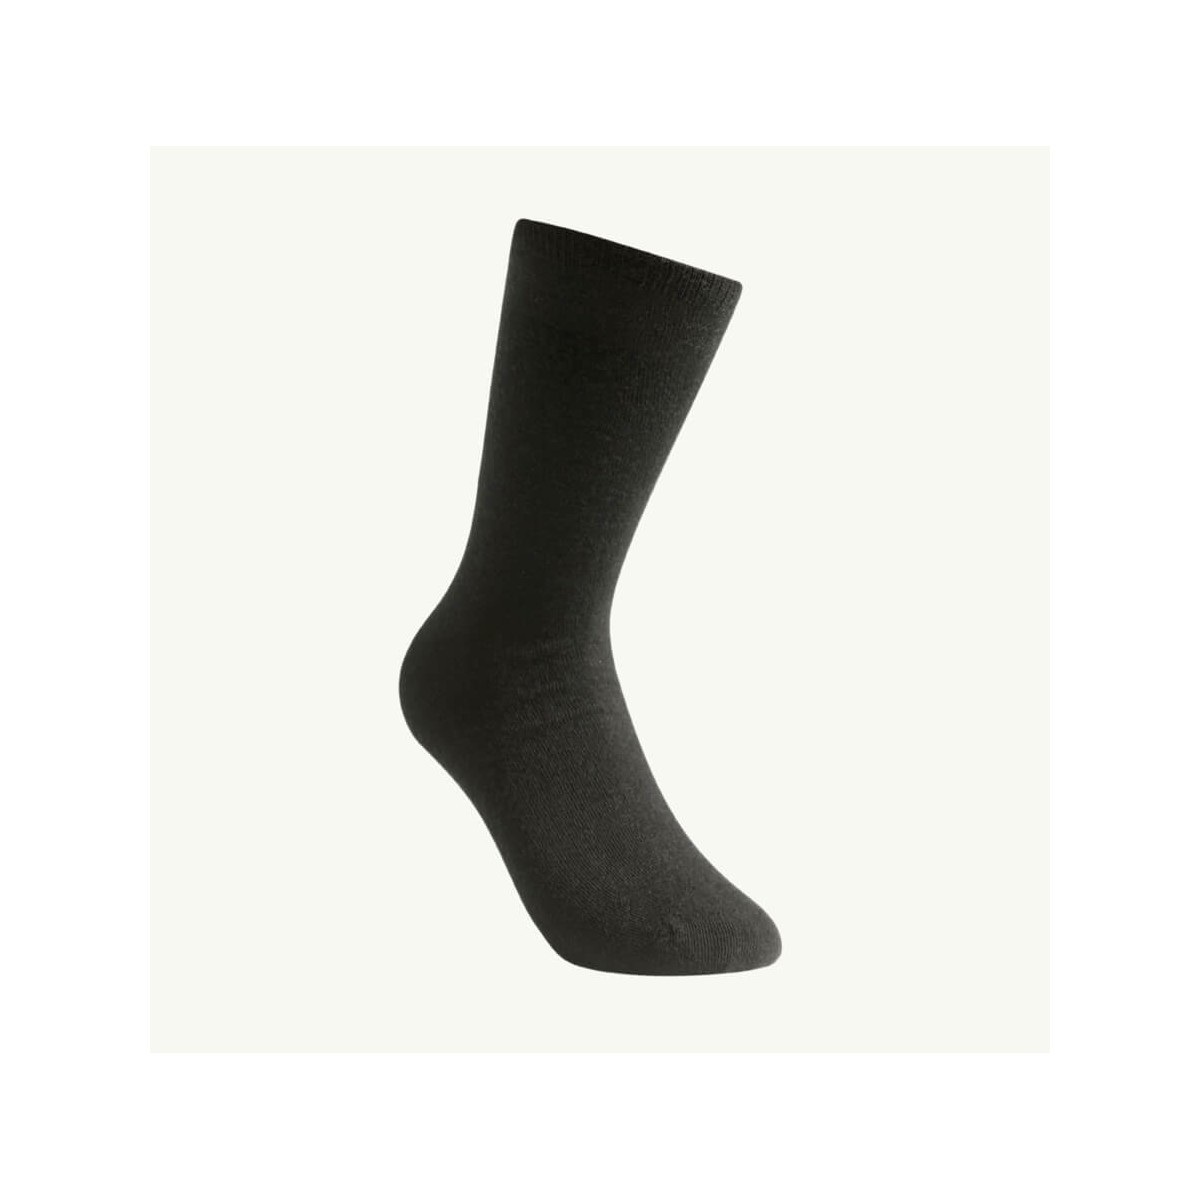 Woolpower Socks Liner Classic 3 Pack